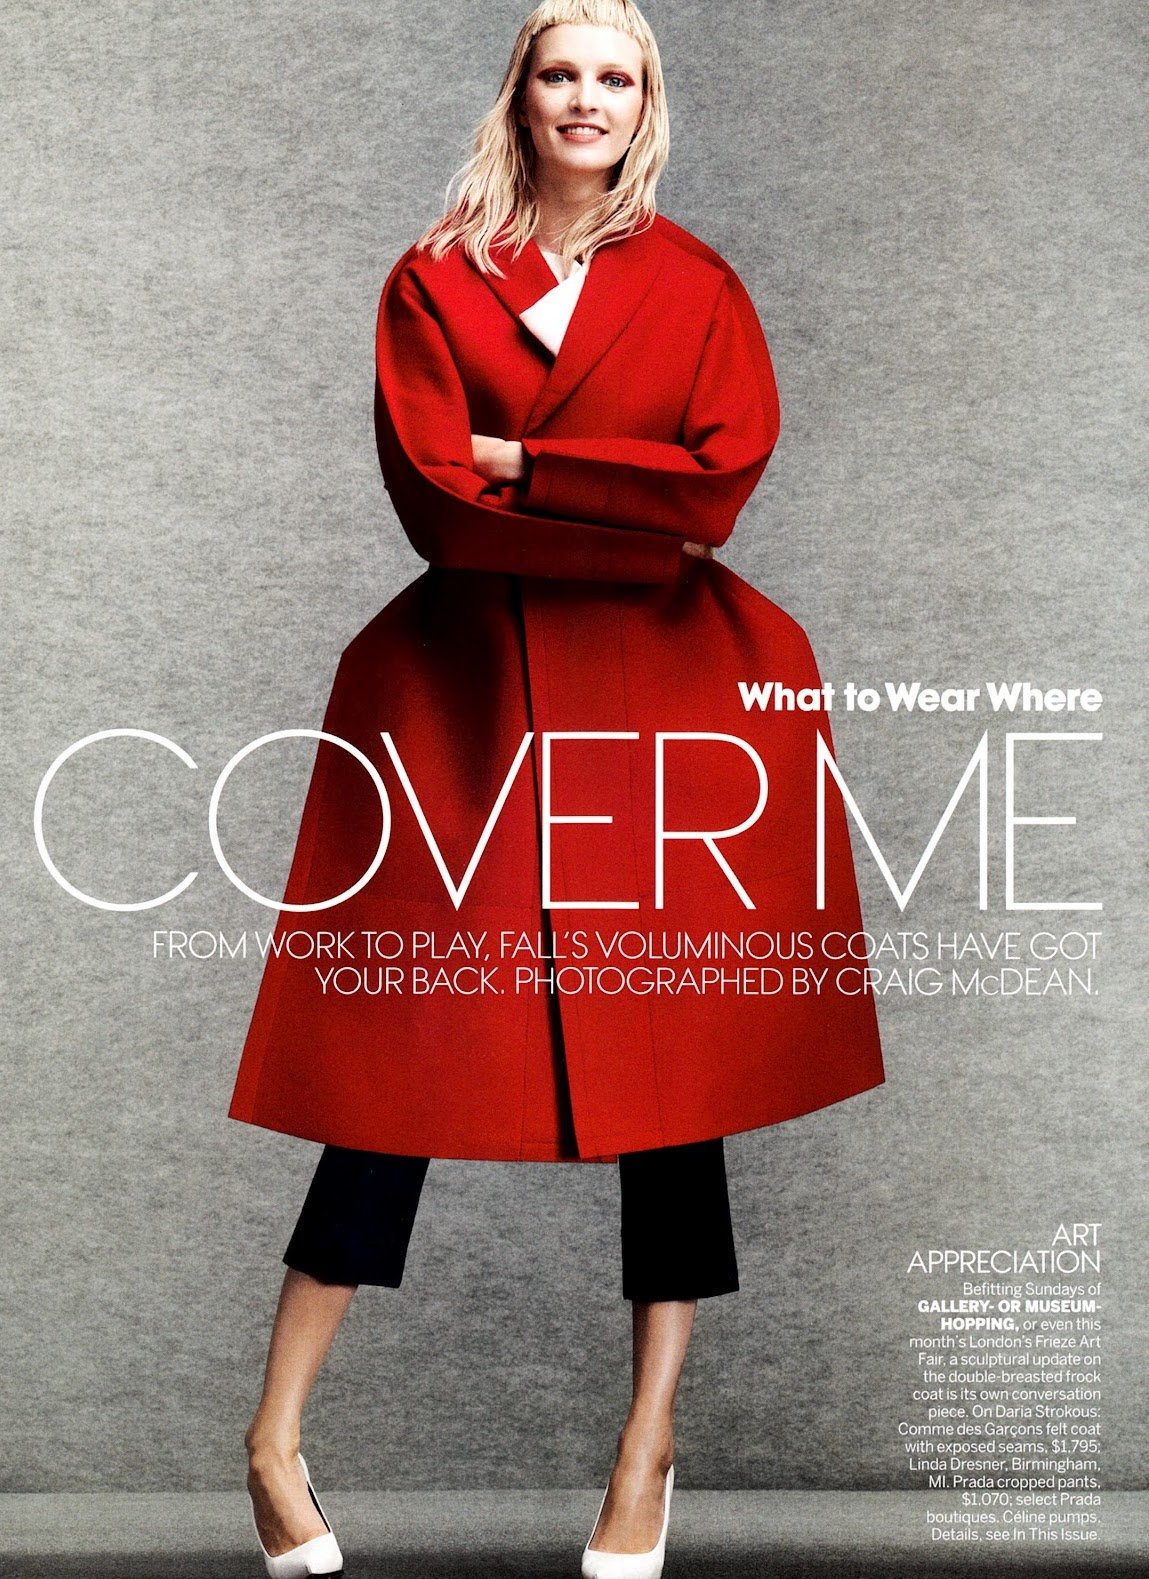 Karlie-Kloss-Daria-Strokous-by-Craig-McDean-Vogue-October-2012-2.jpg